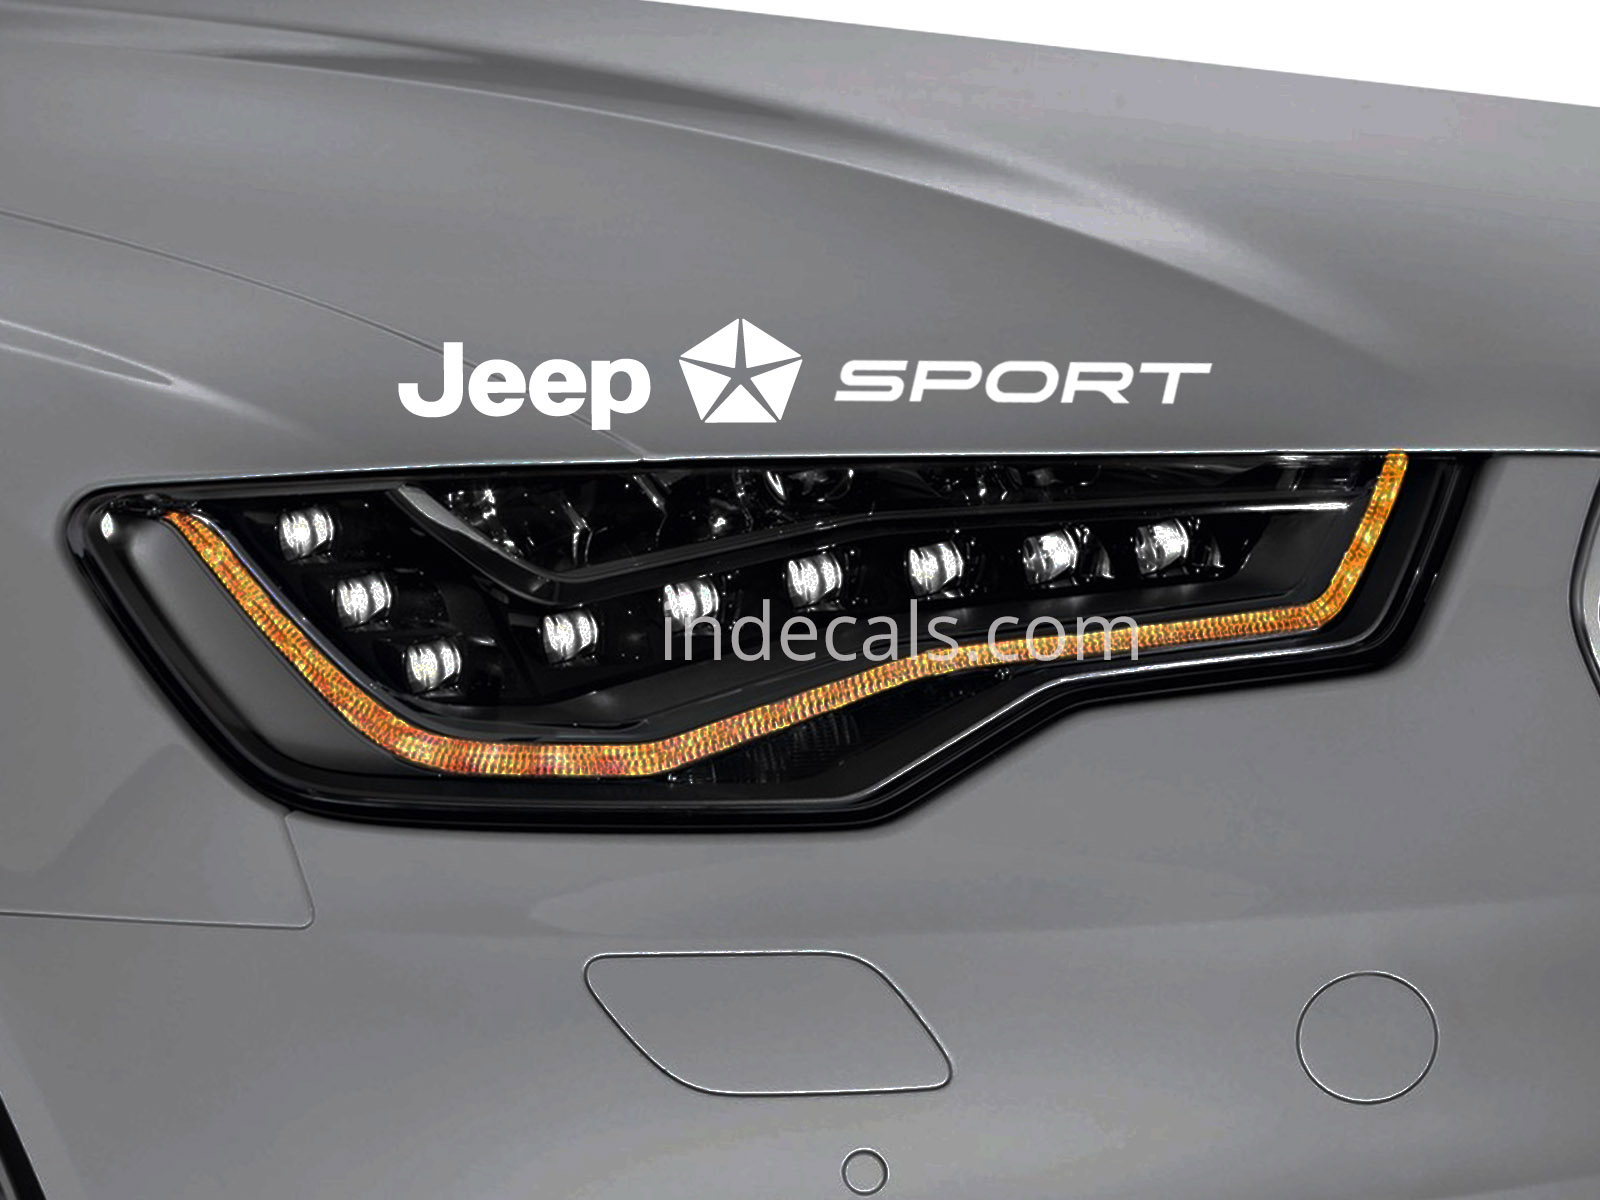 1 x Jeep Sport Sticker for Eyebrow - White